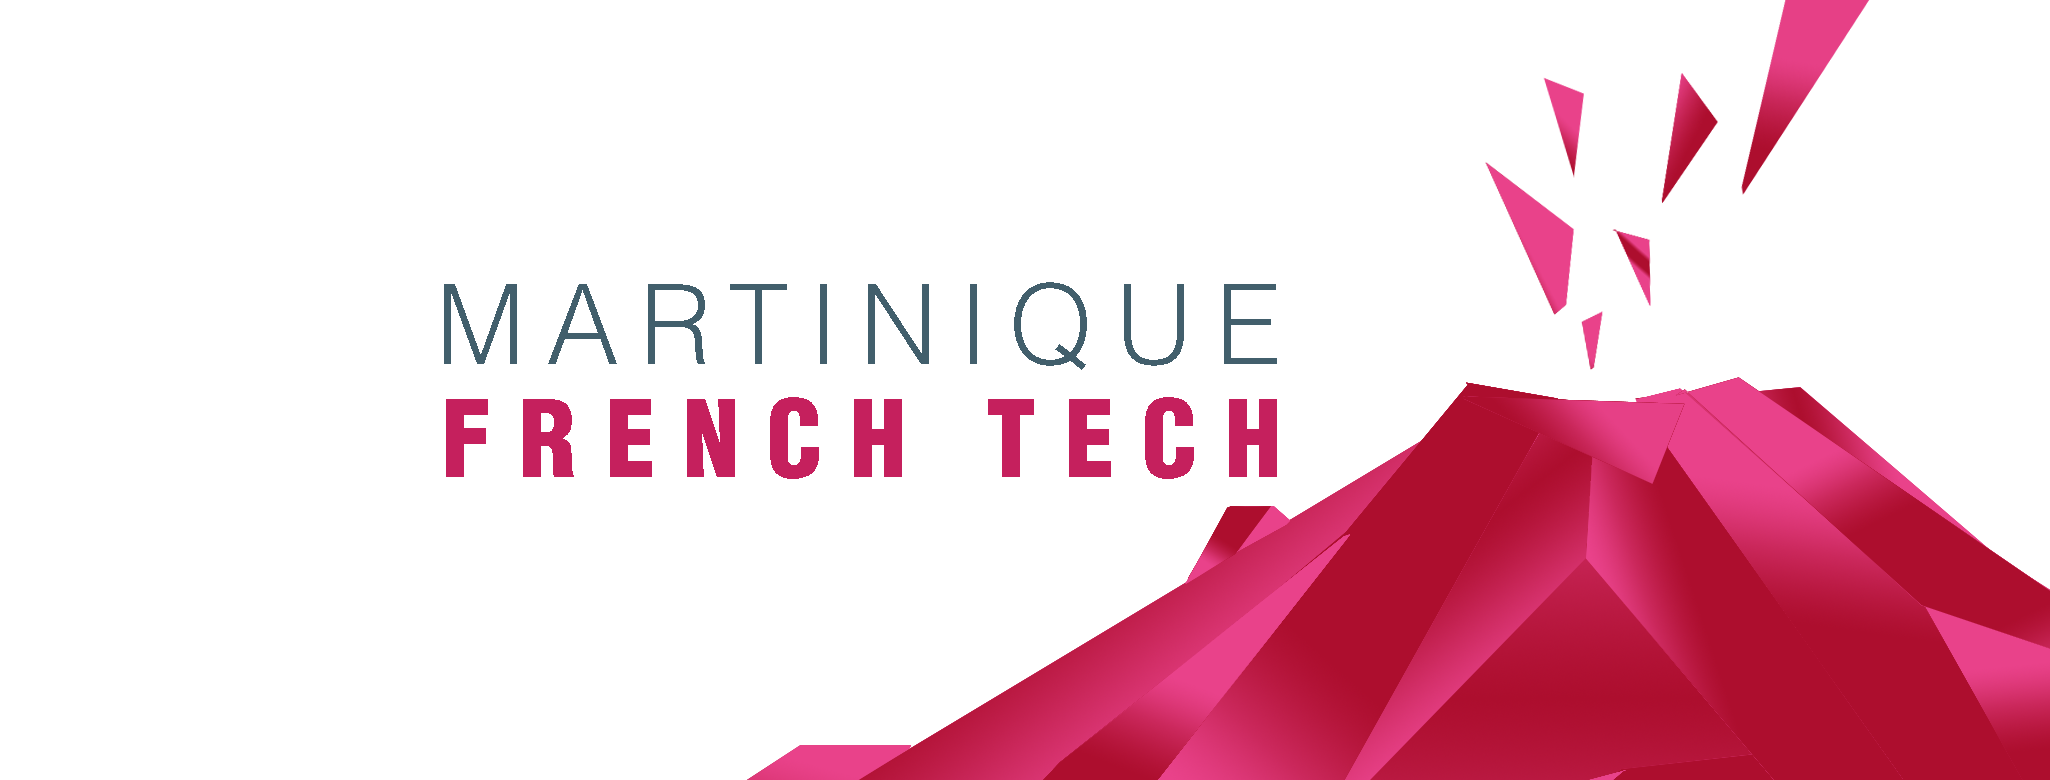 French Tech Martinique